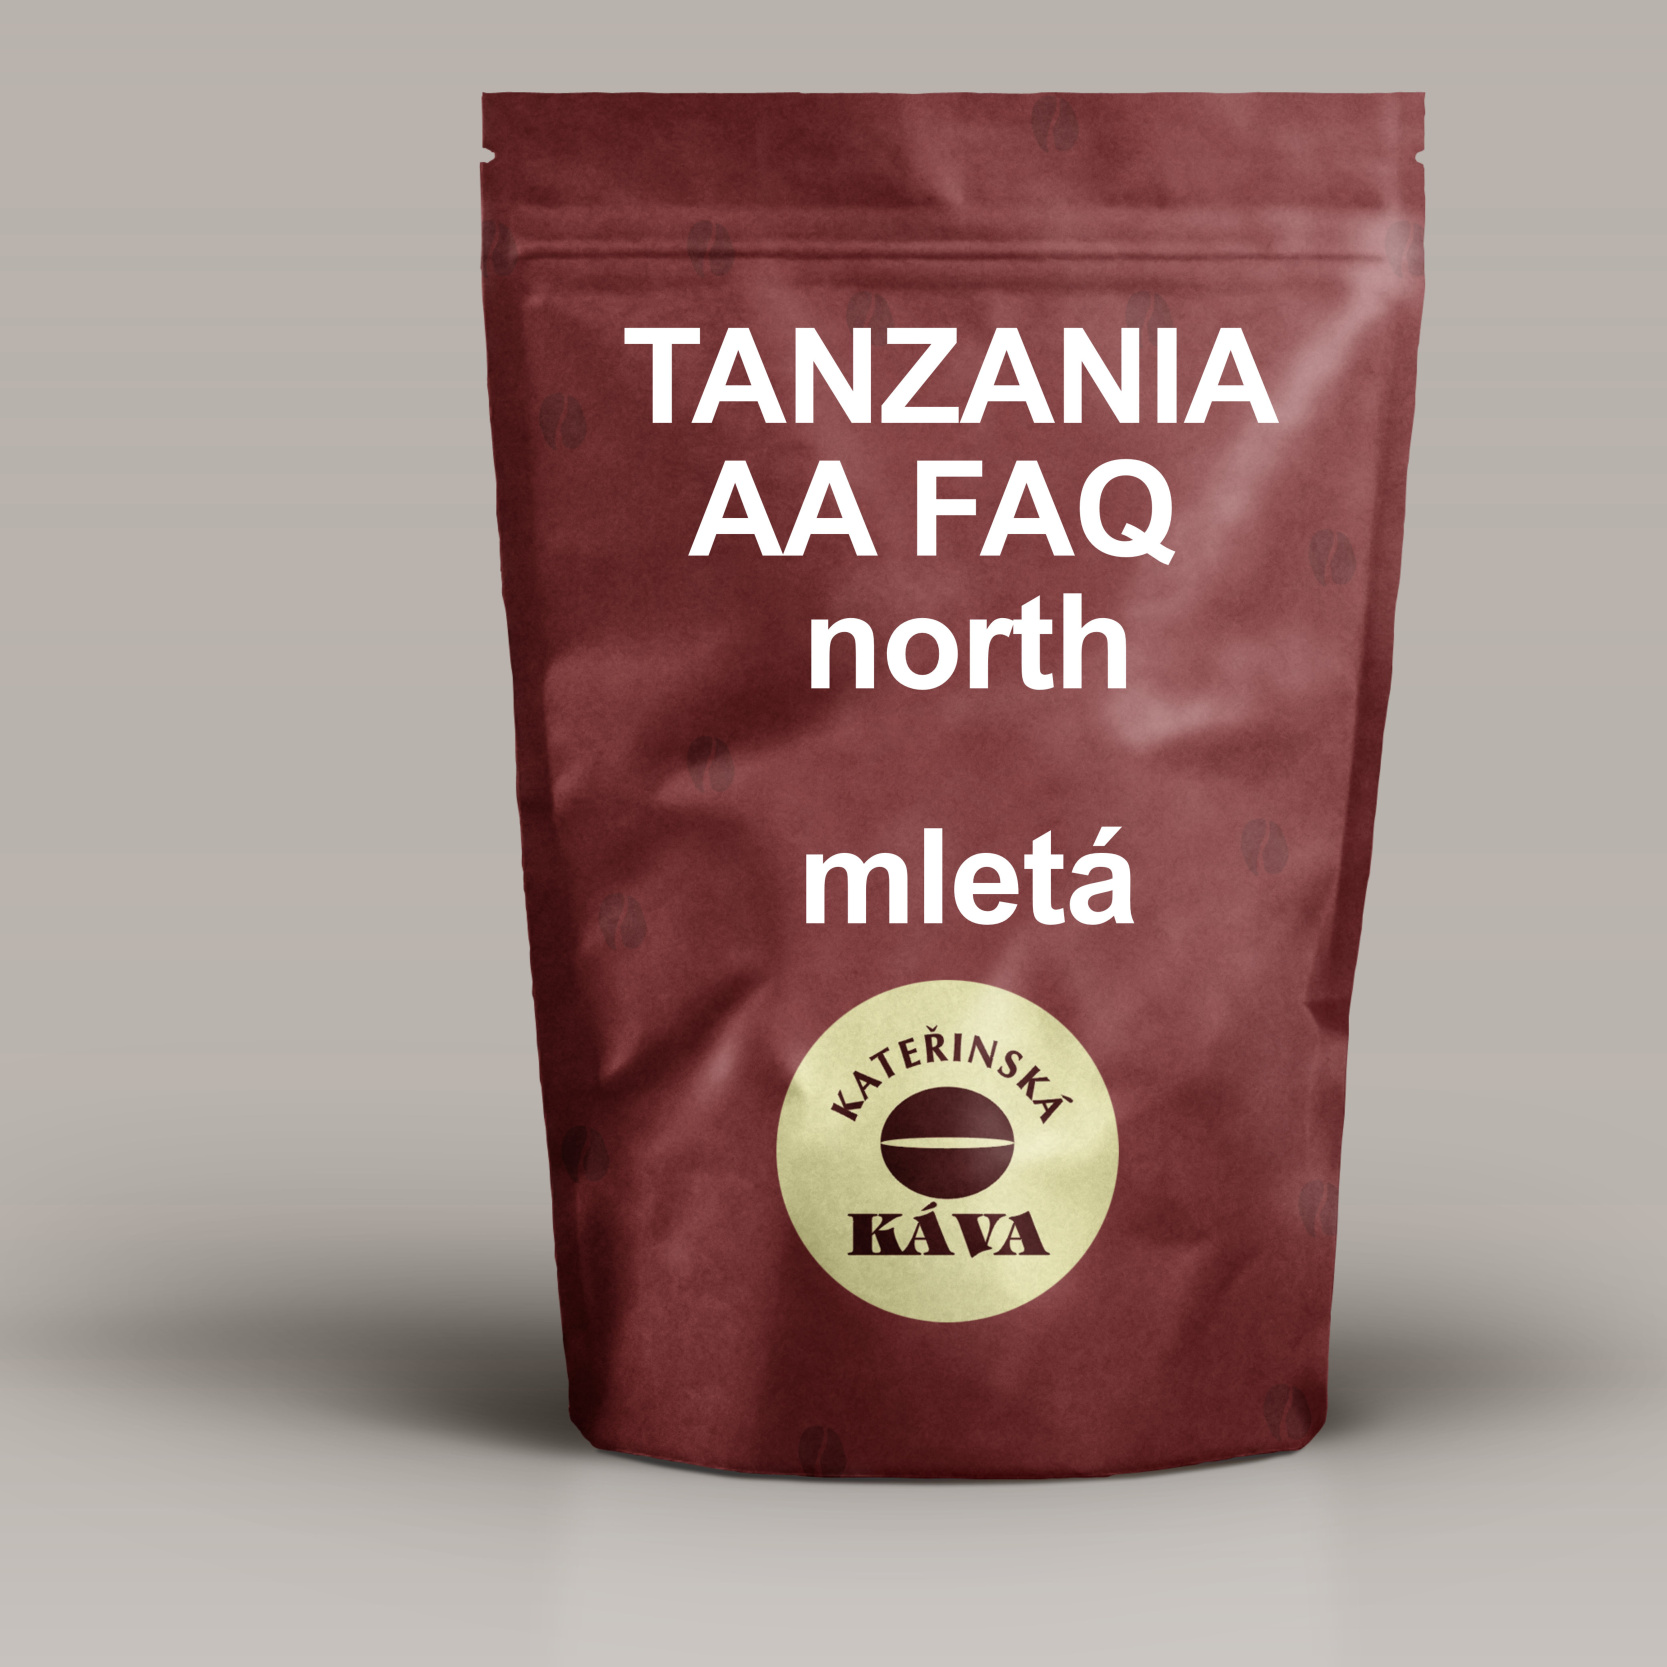 TANZANIA AA FAQ North -mletá